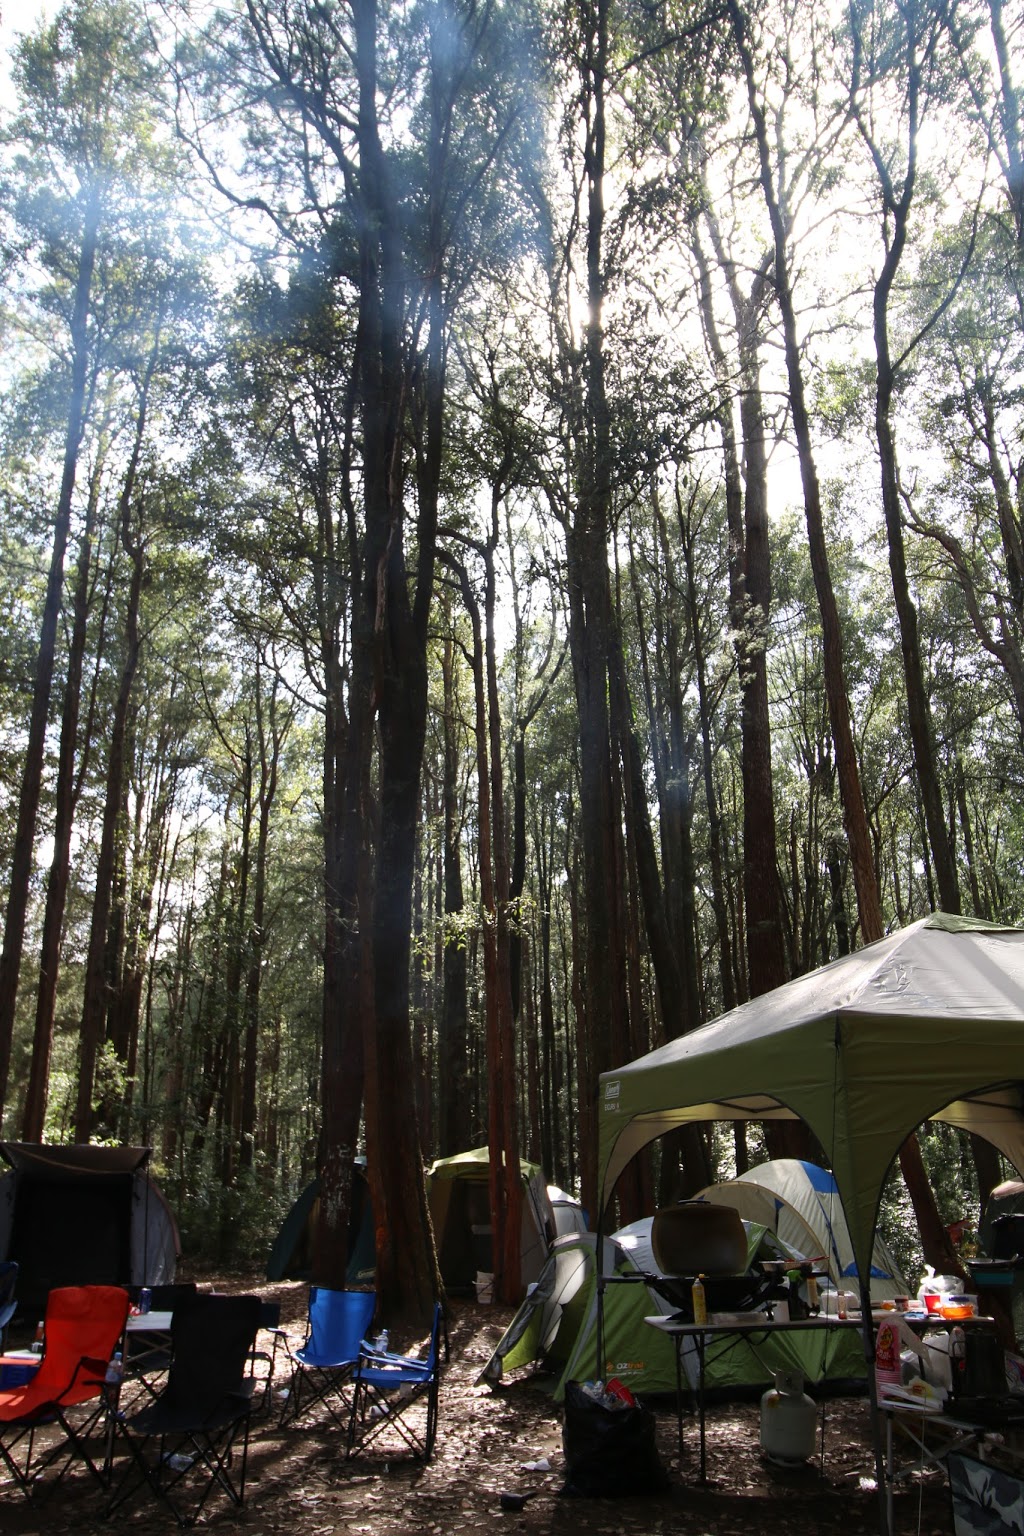 Casuarina Camping Area | campground | Martinsville NSW 2265, Australia